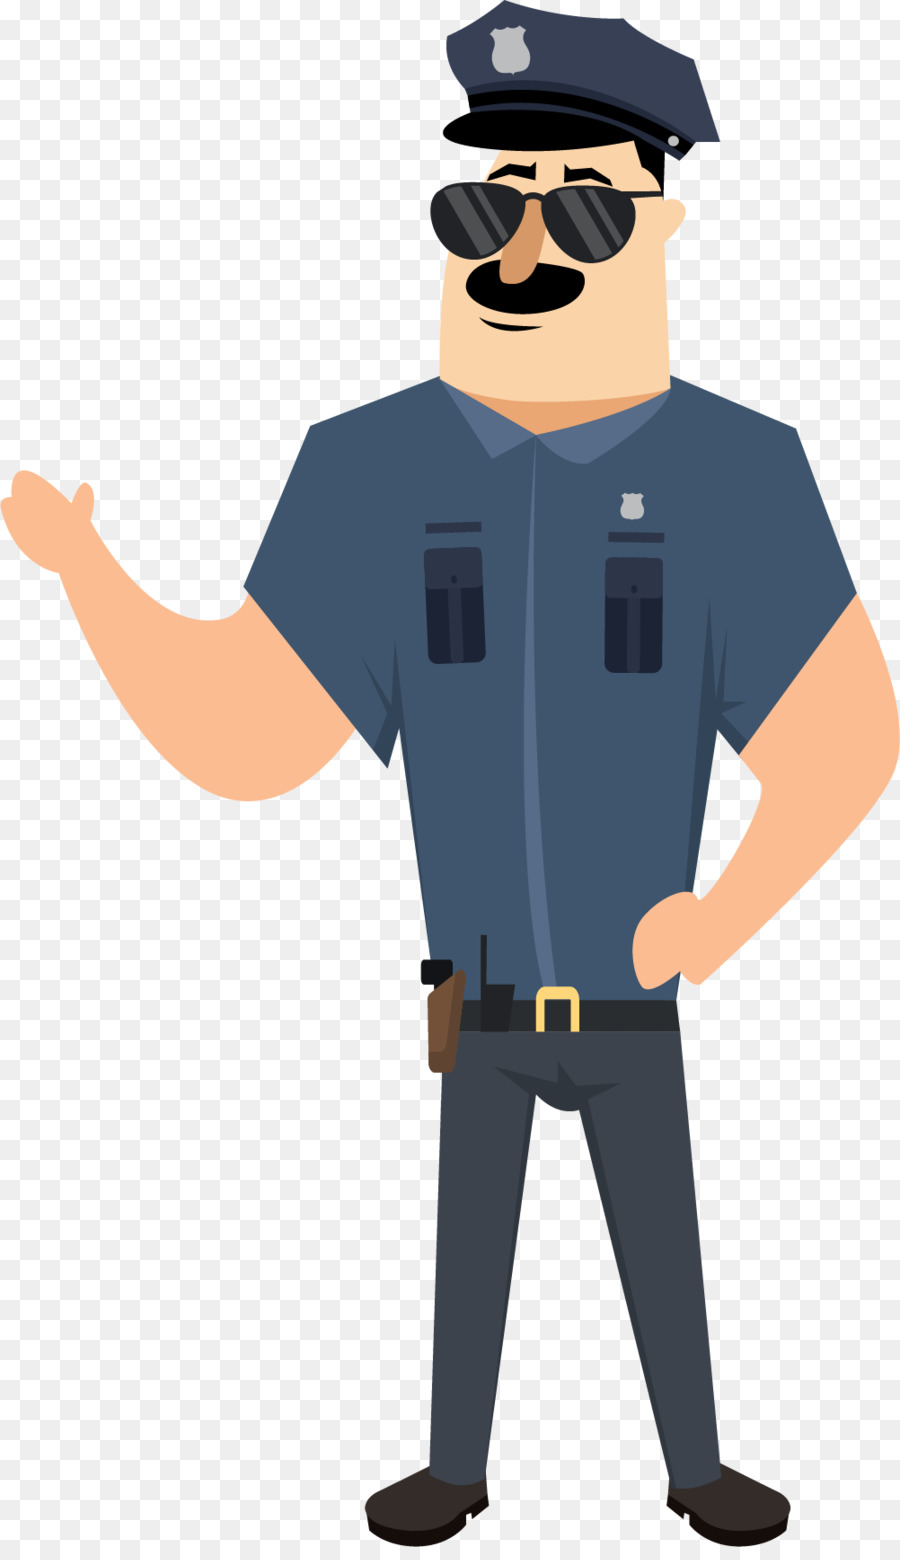 Cartoon Police Illustration - Cartoon cop png download - 1002*1722 - Free Transparent Police png Download.